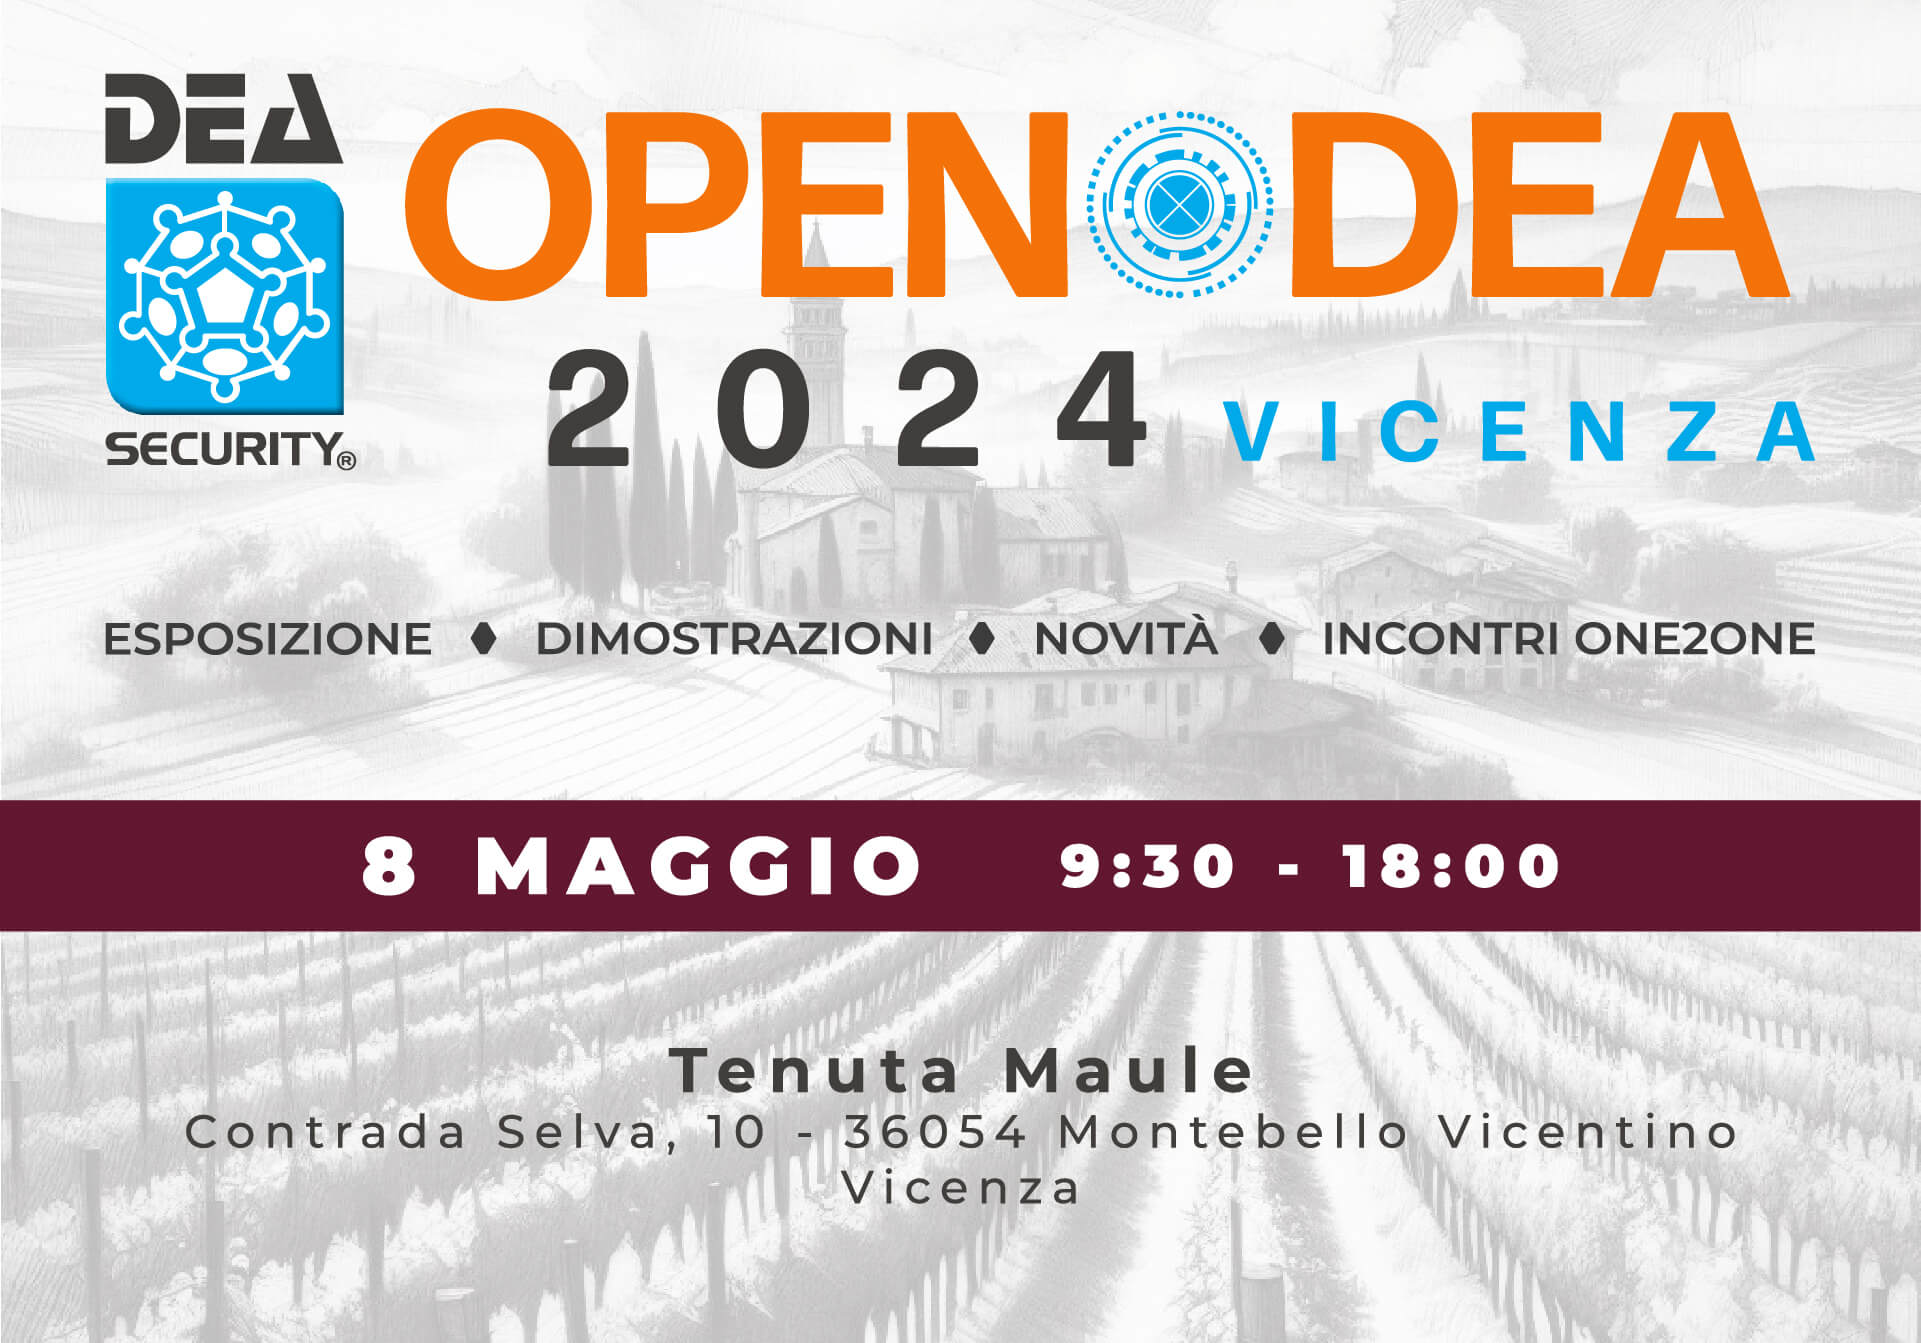 DEA Open Day 2024, Vicenza